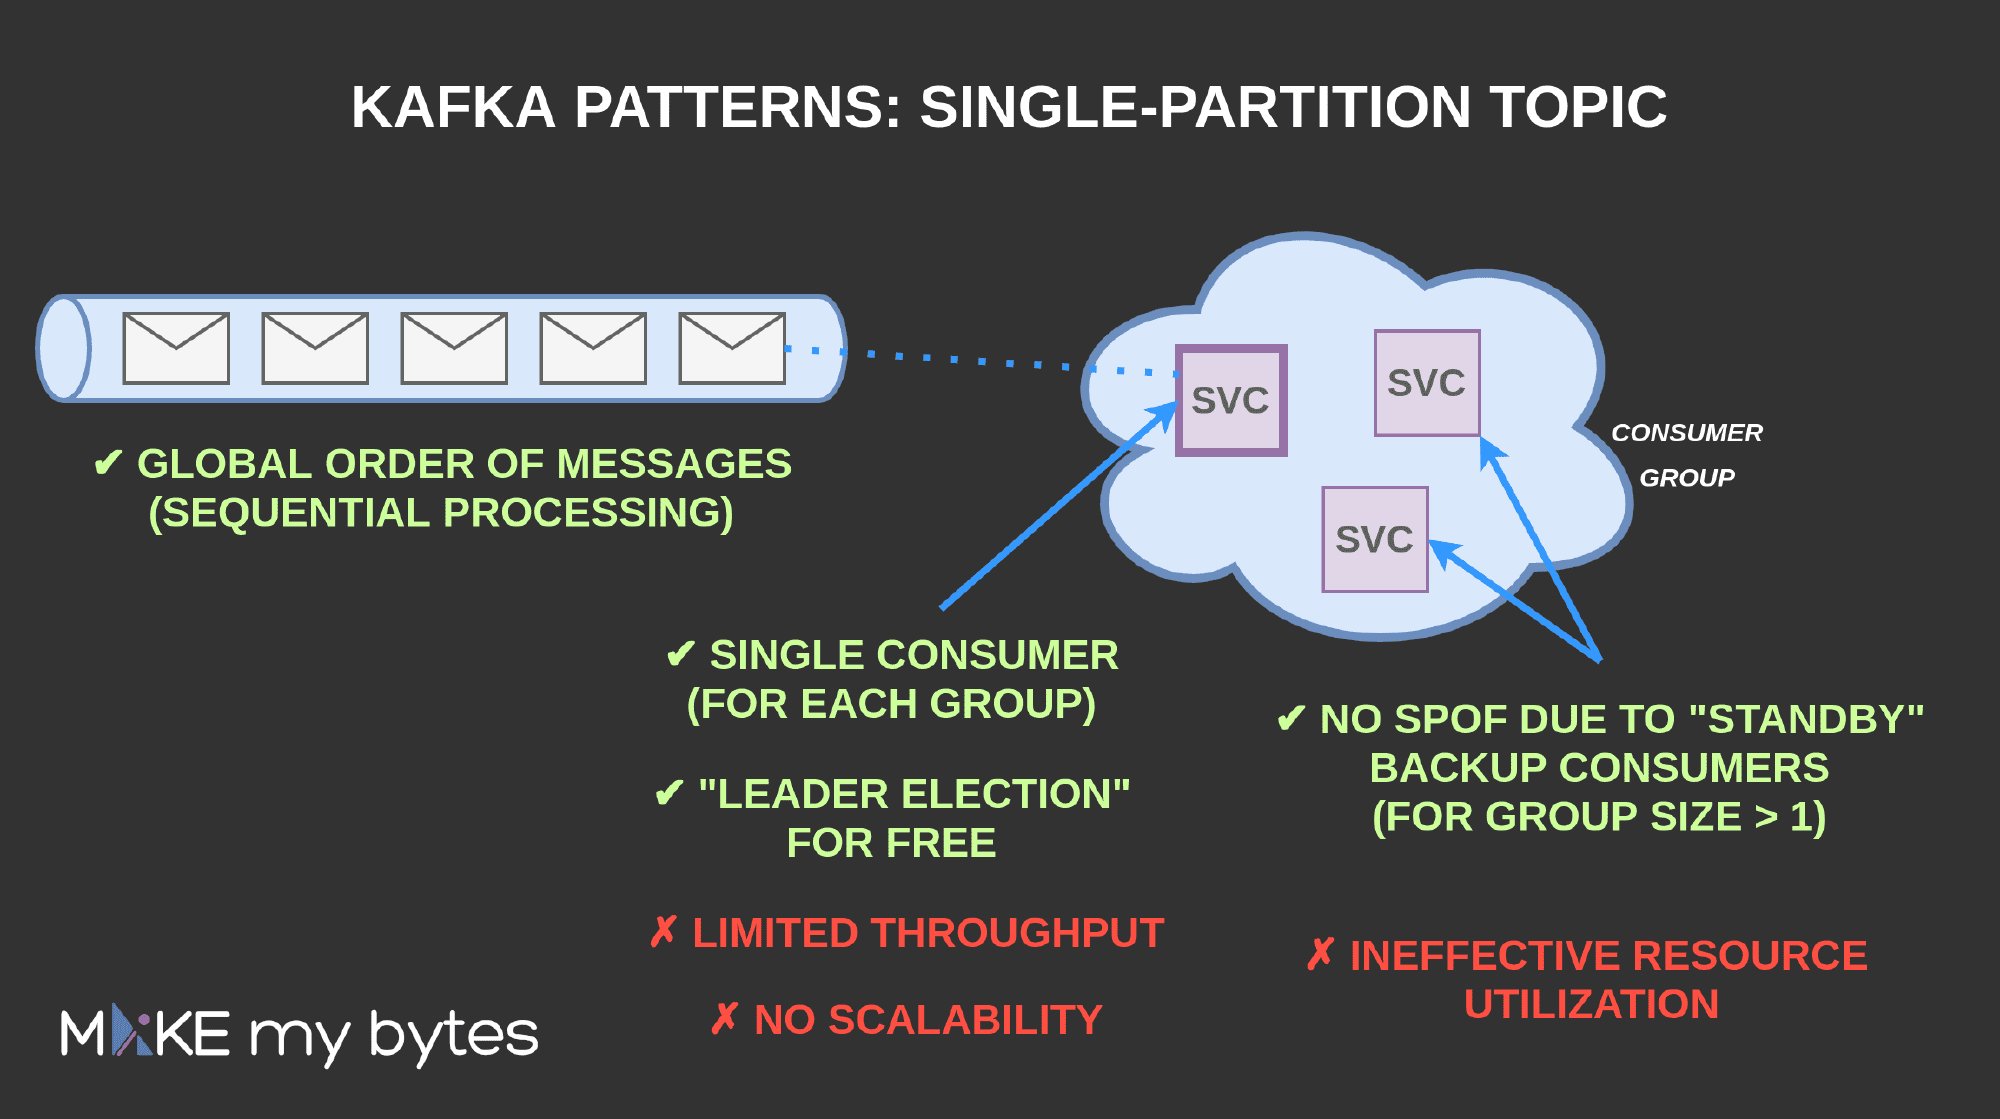 Single-partition Kafka topic illustration